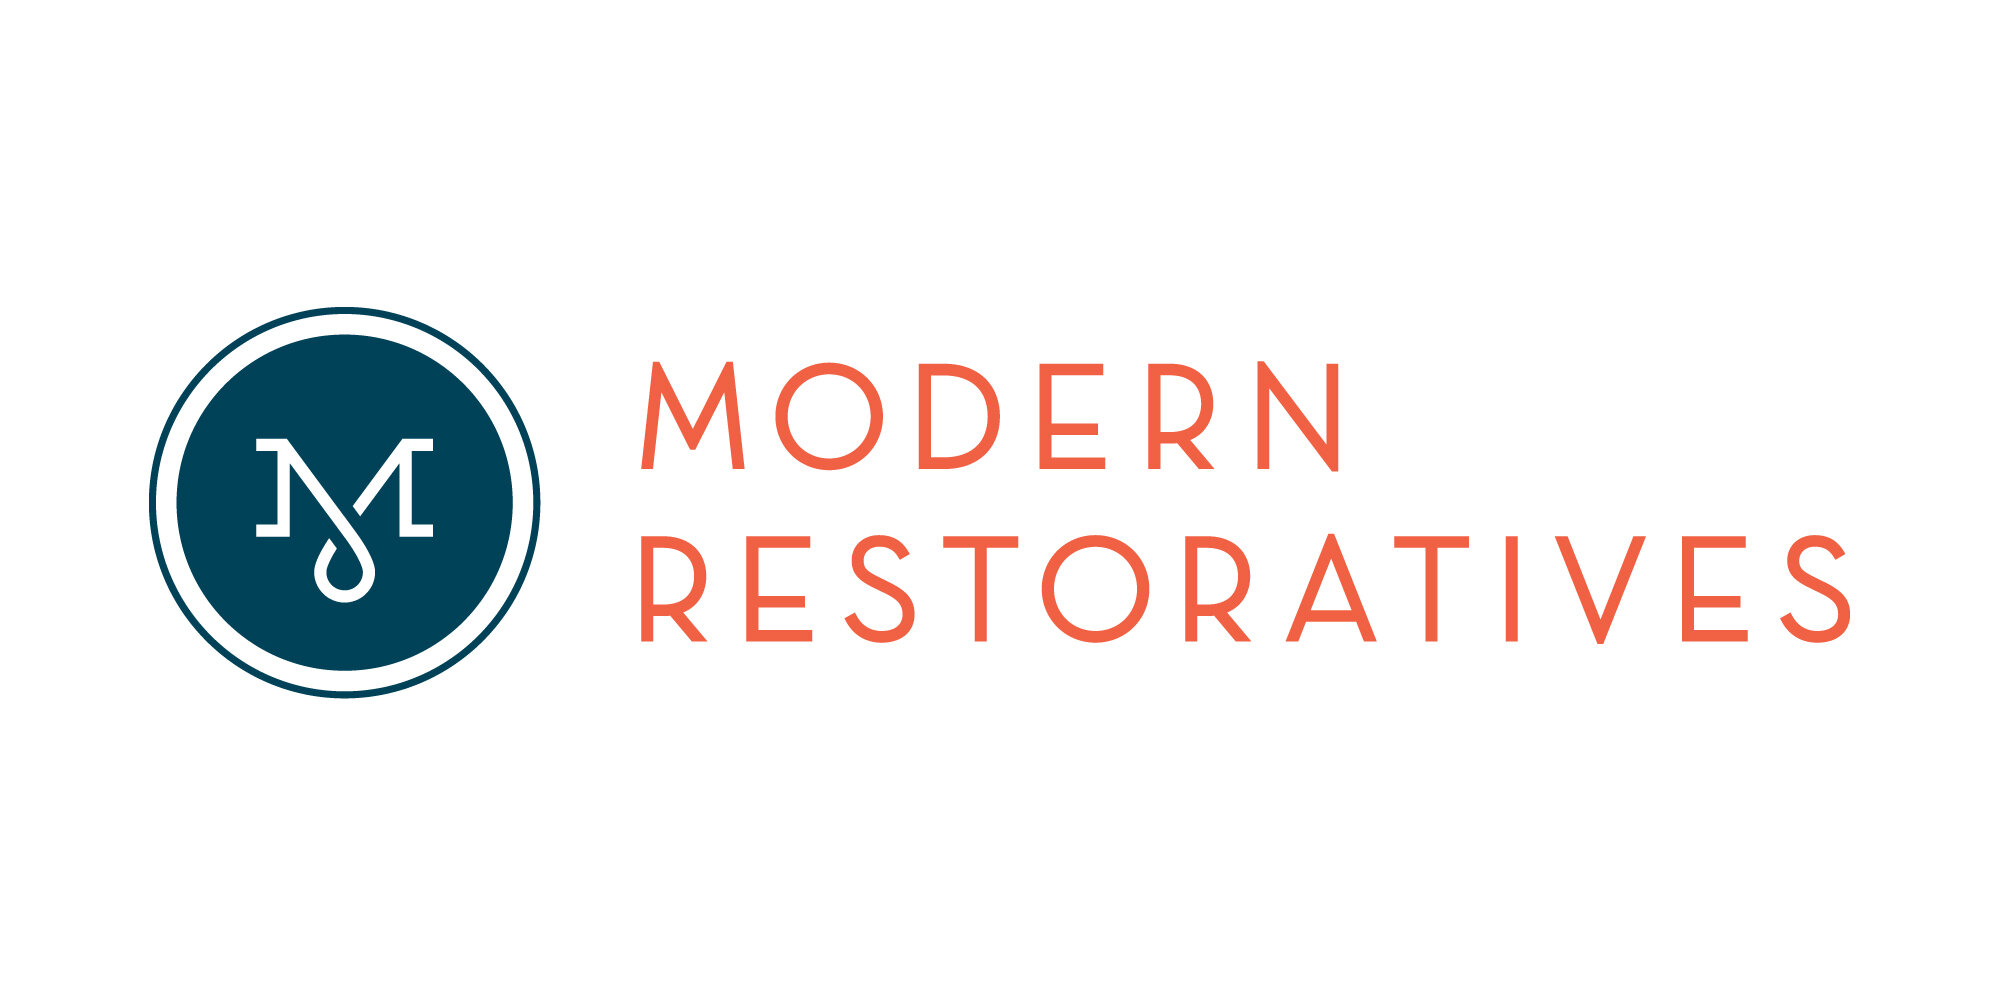 ModernRestoratives_LogoFull.jpg